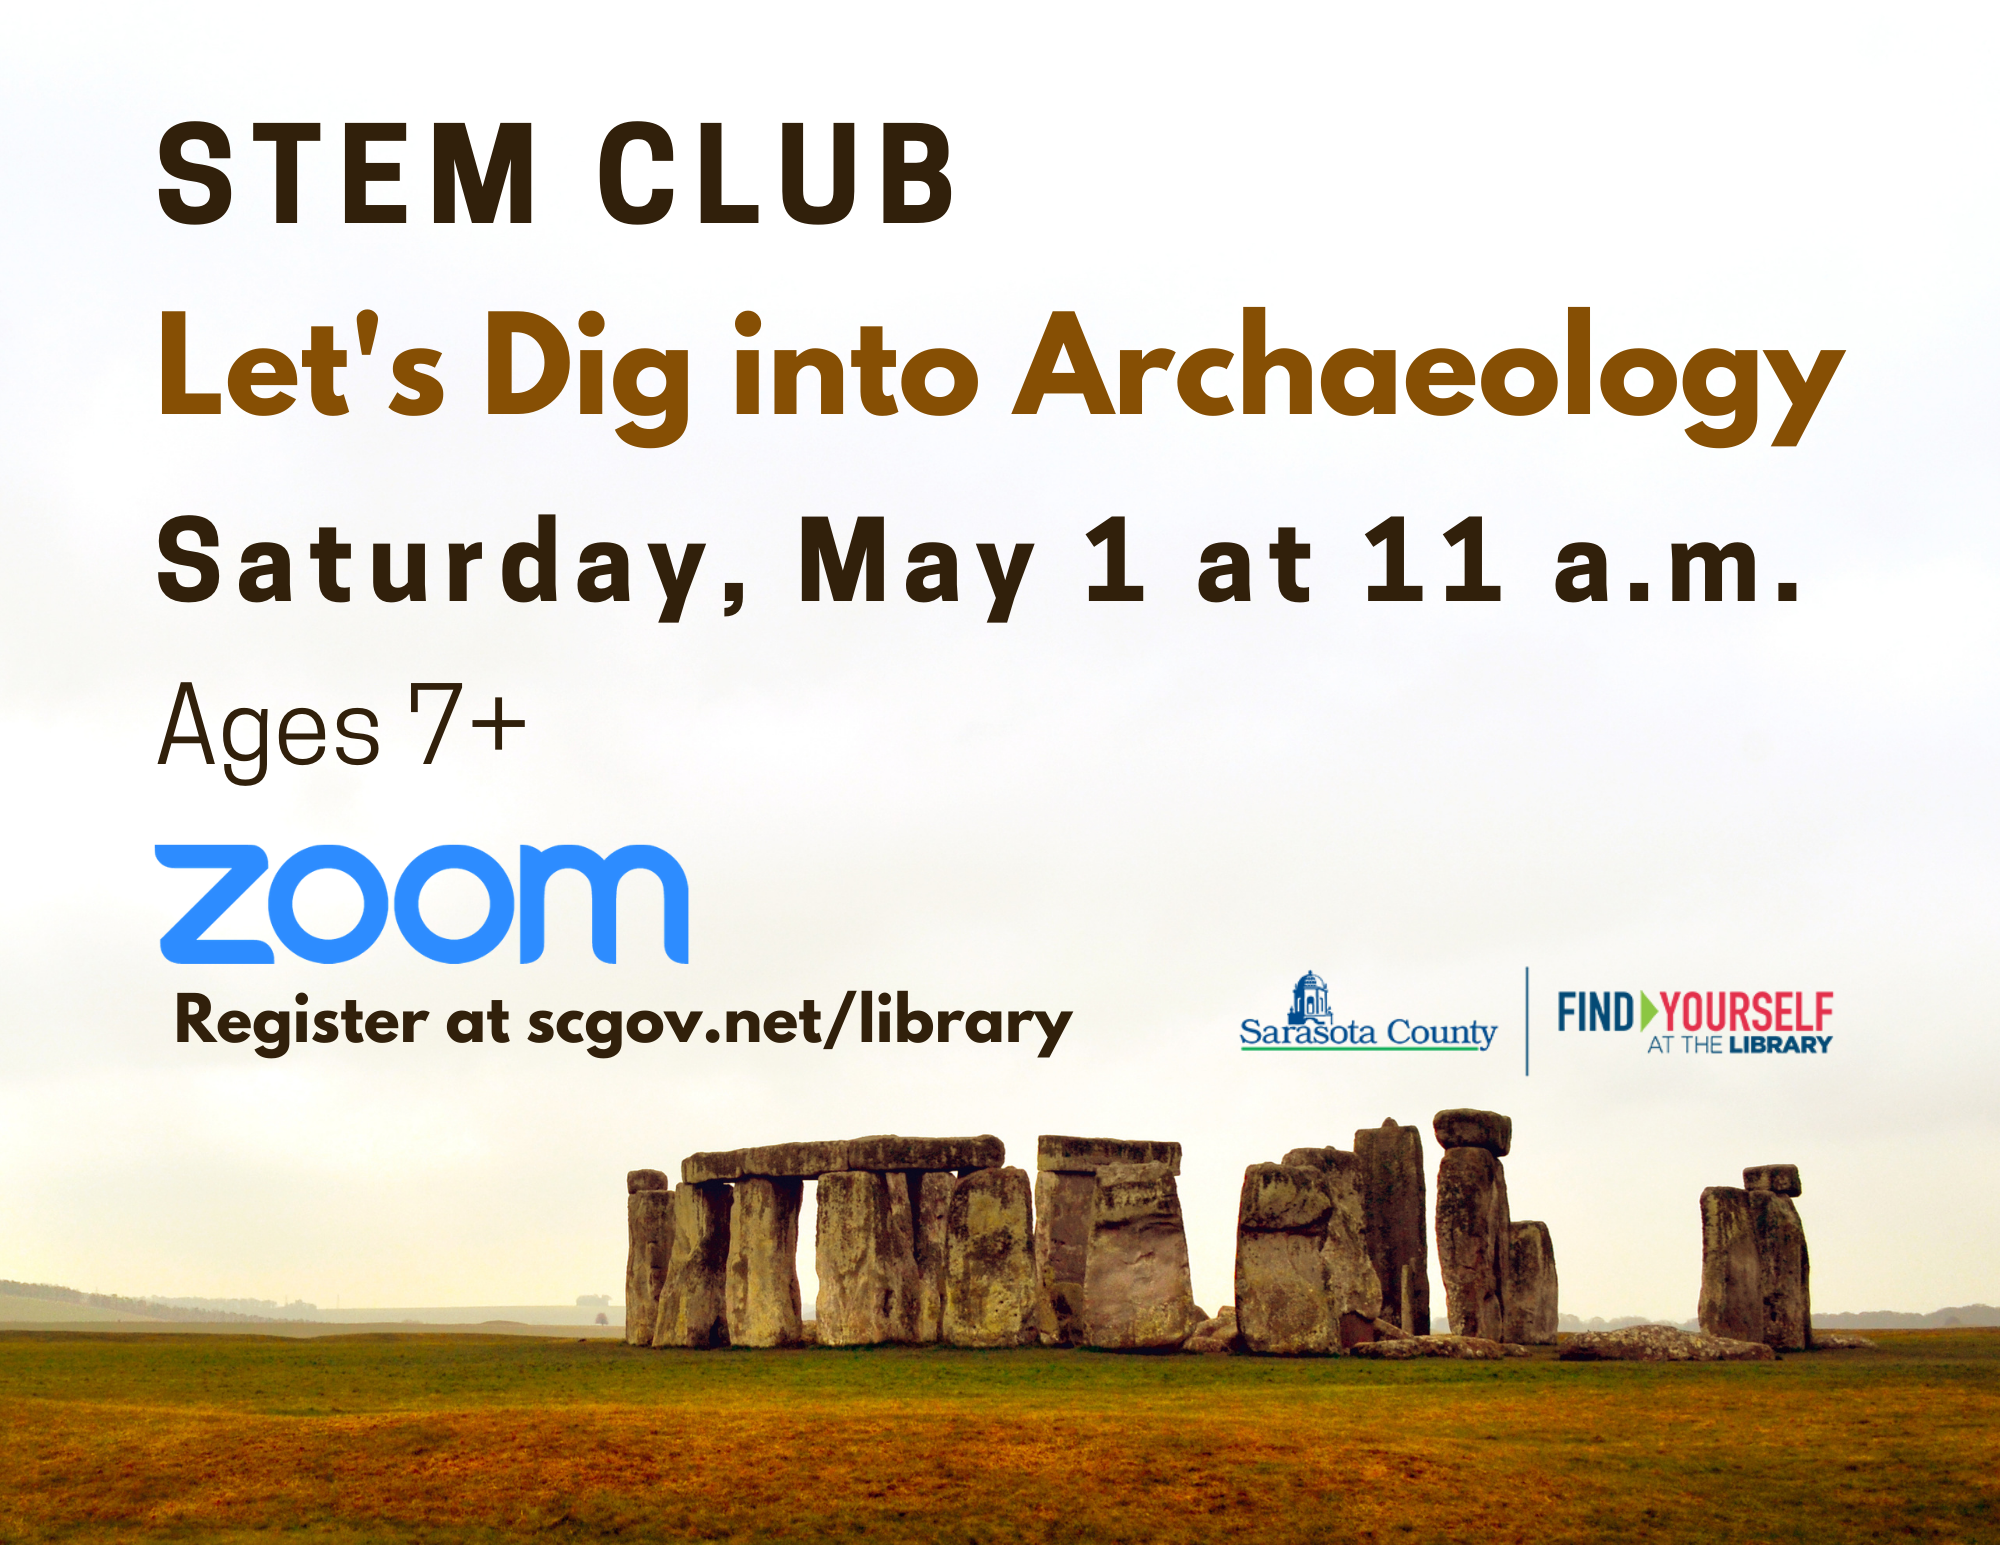 STEM Club: Let's Dig into Archaeology, Stonehenge image